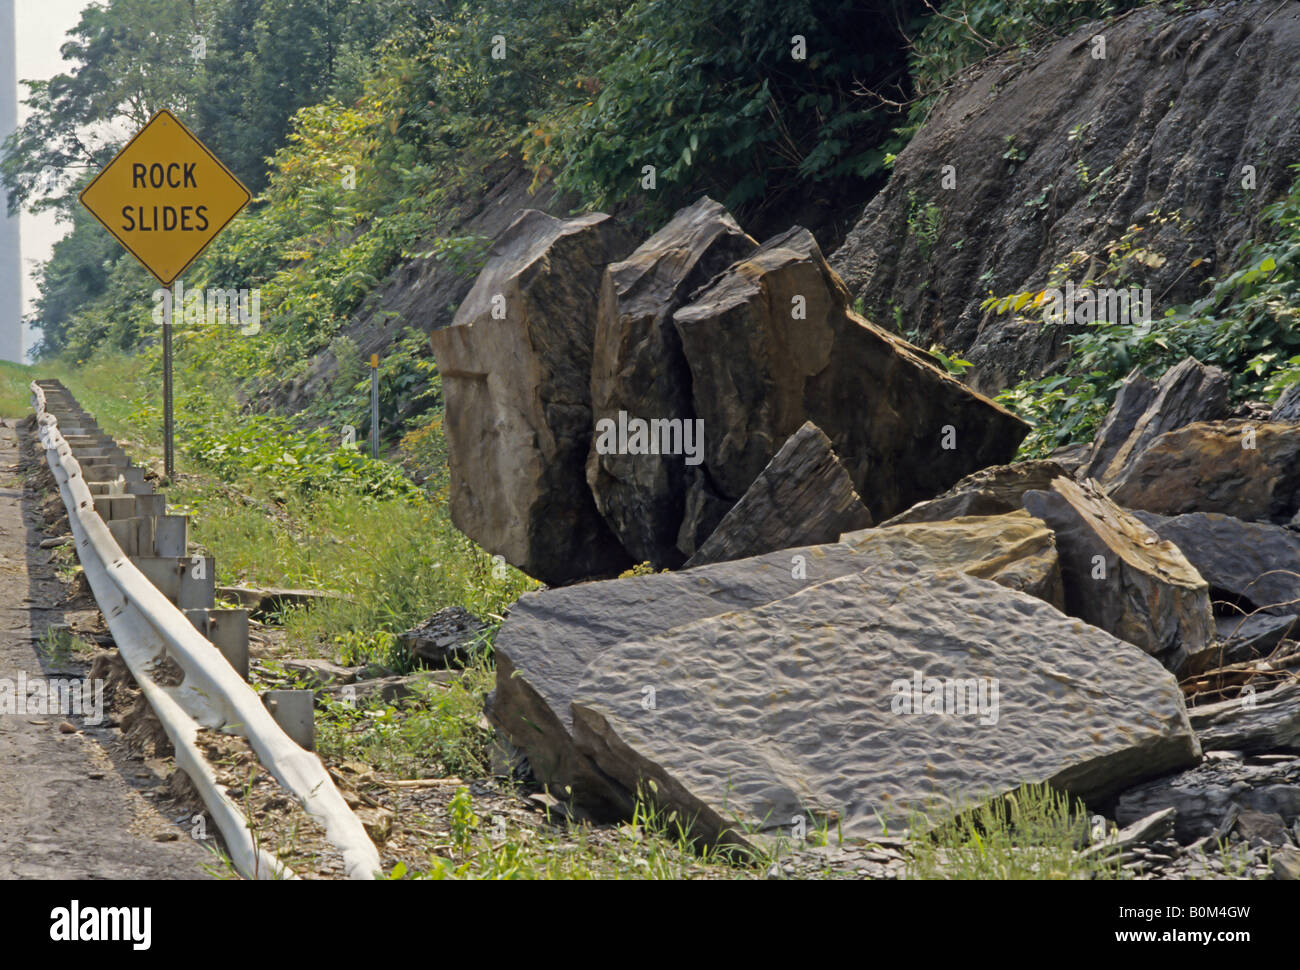 Rock Slides sign along base of cliff near highway Ohio USA geology landslide fallen boulders erosion Stock Photo